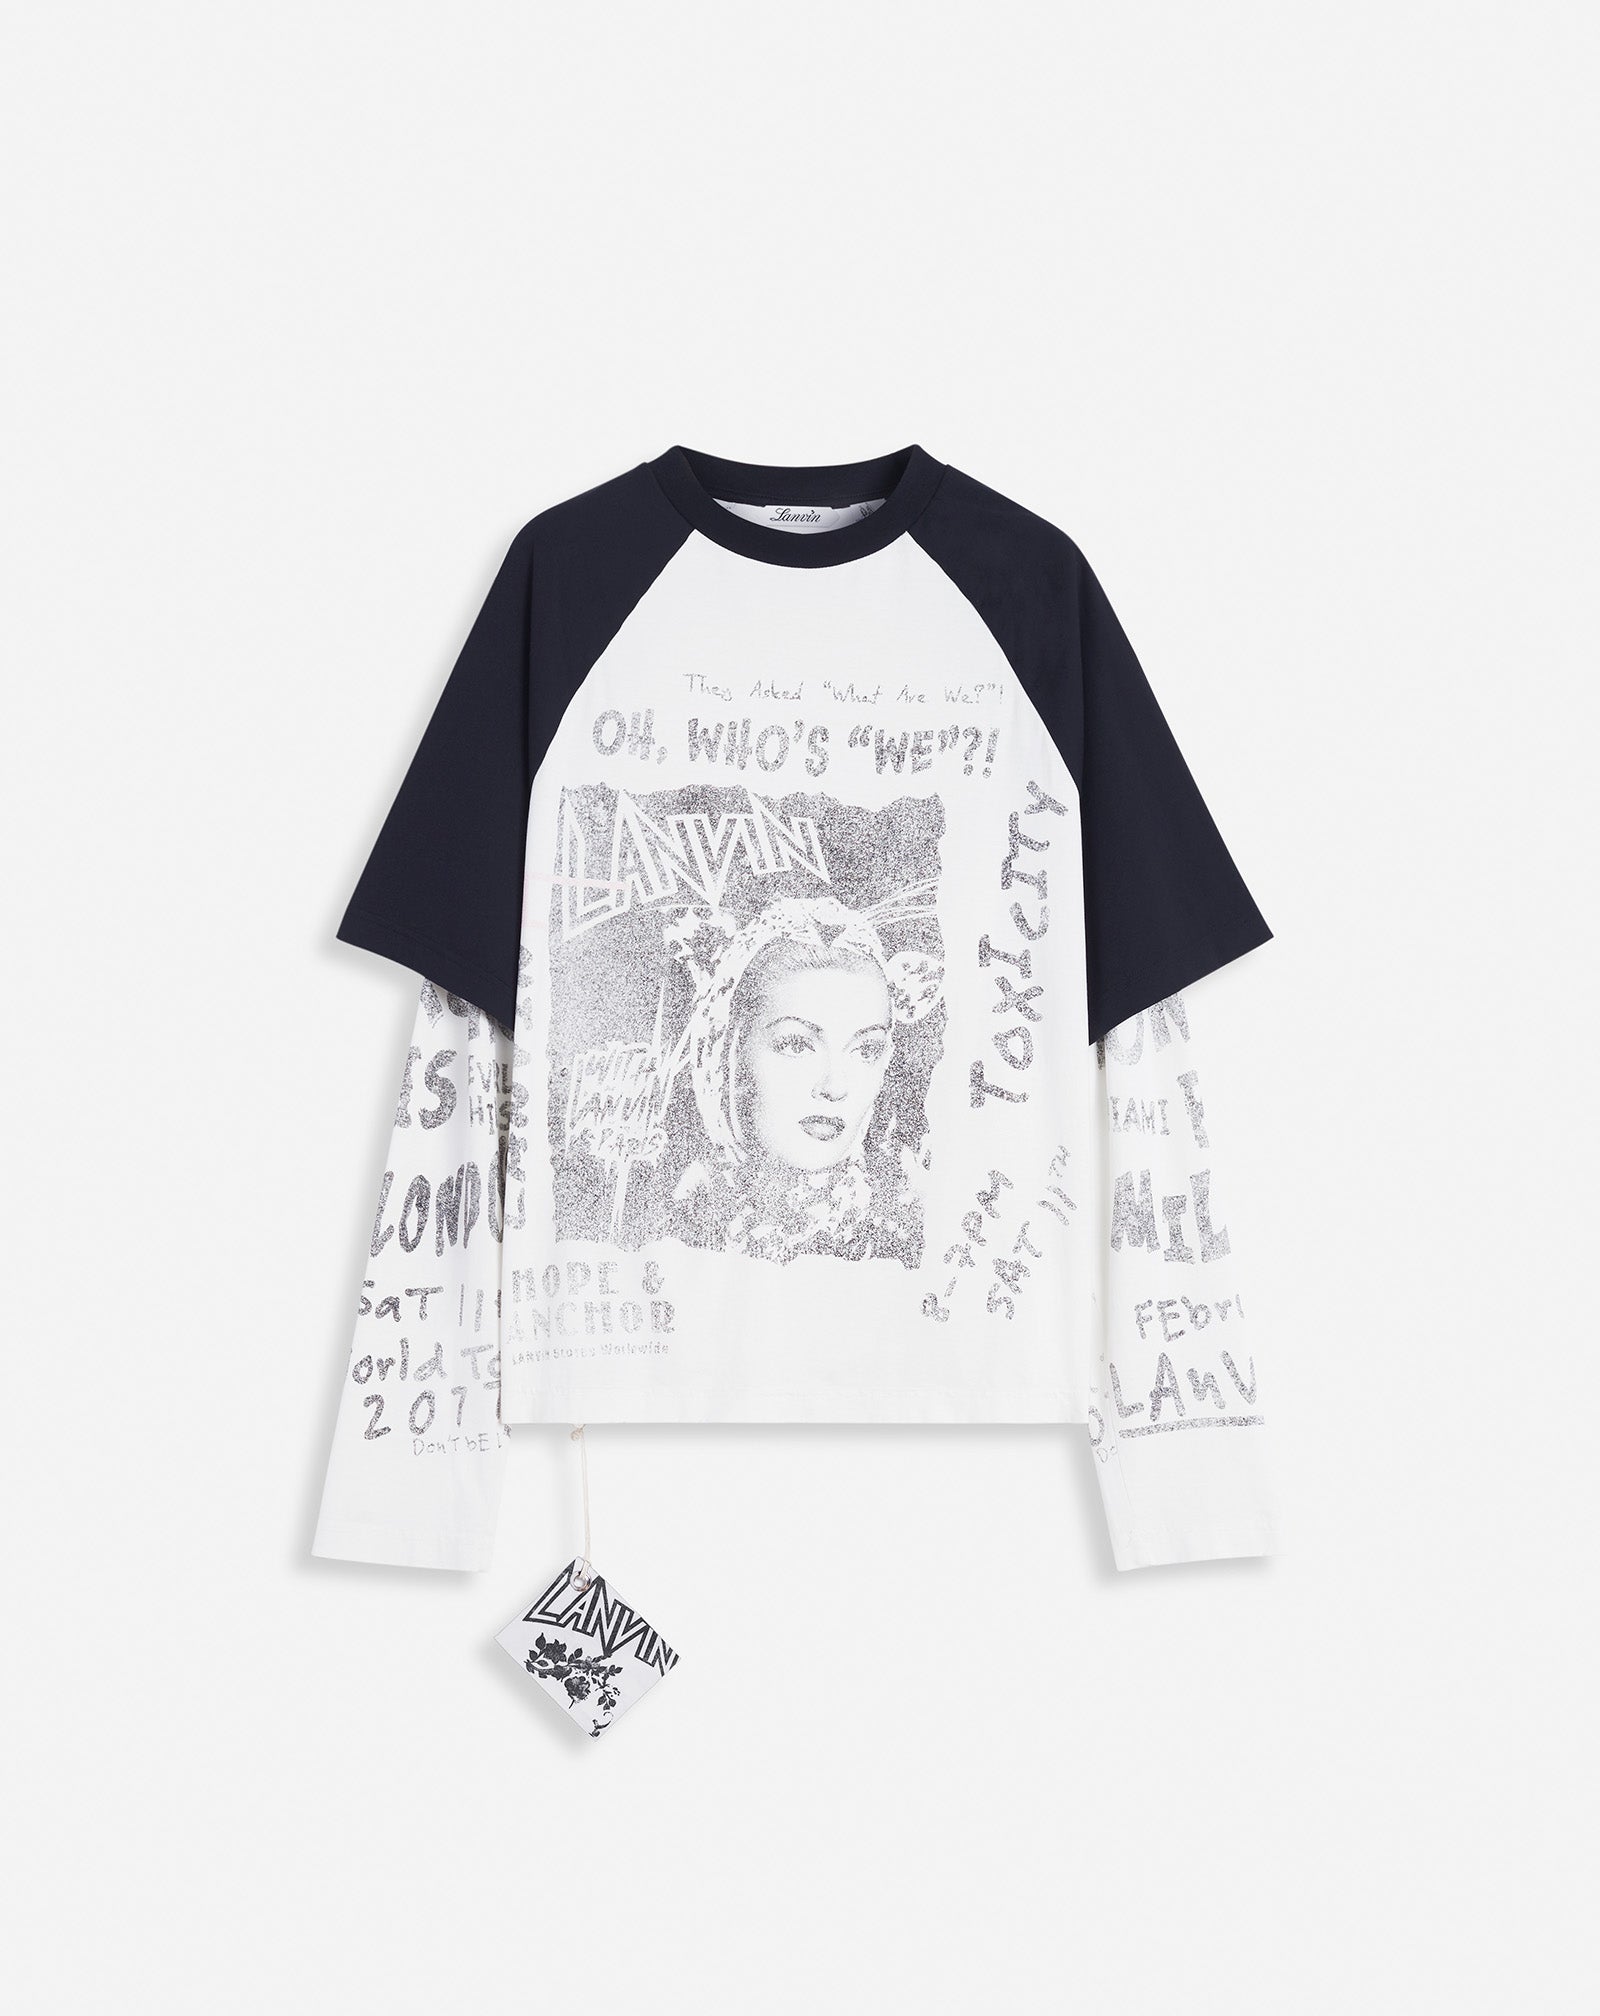 Lanvin x future long-sleeved print t-shirt